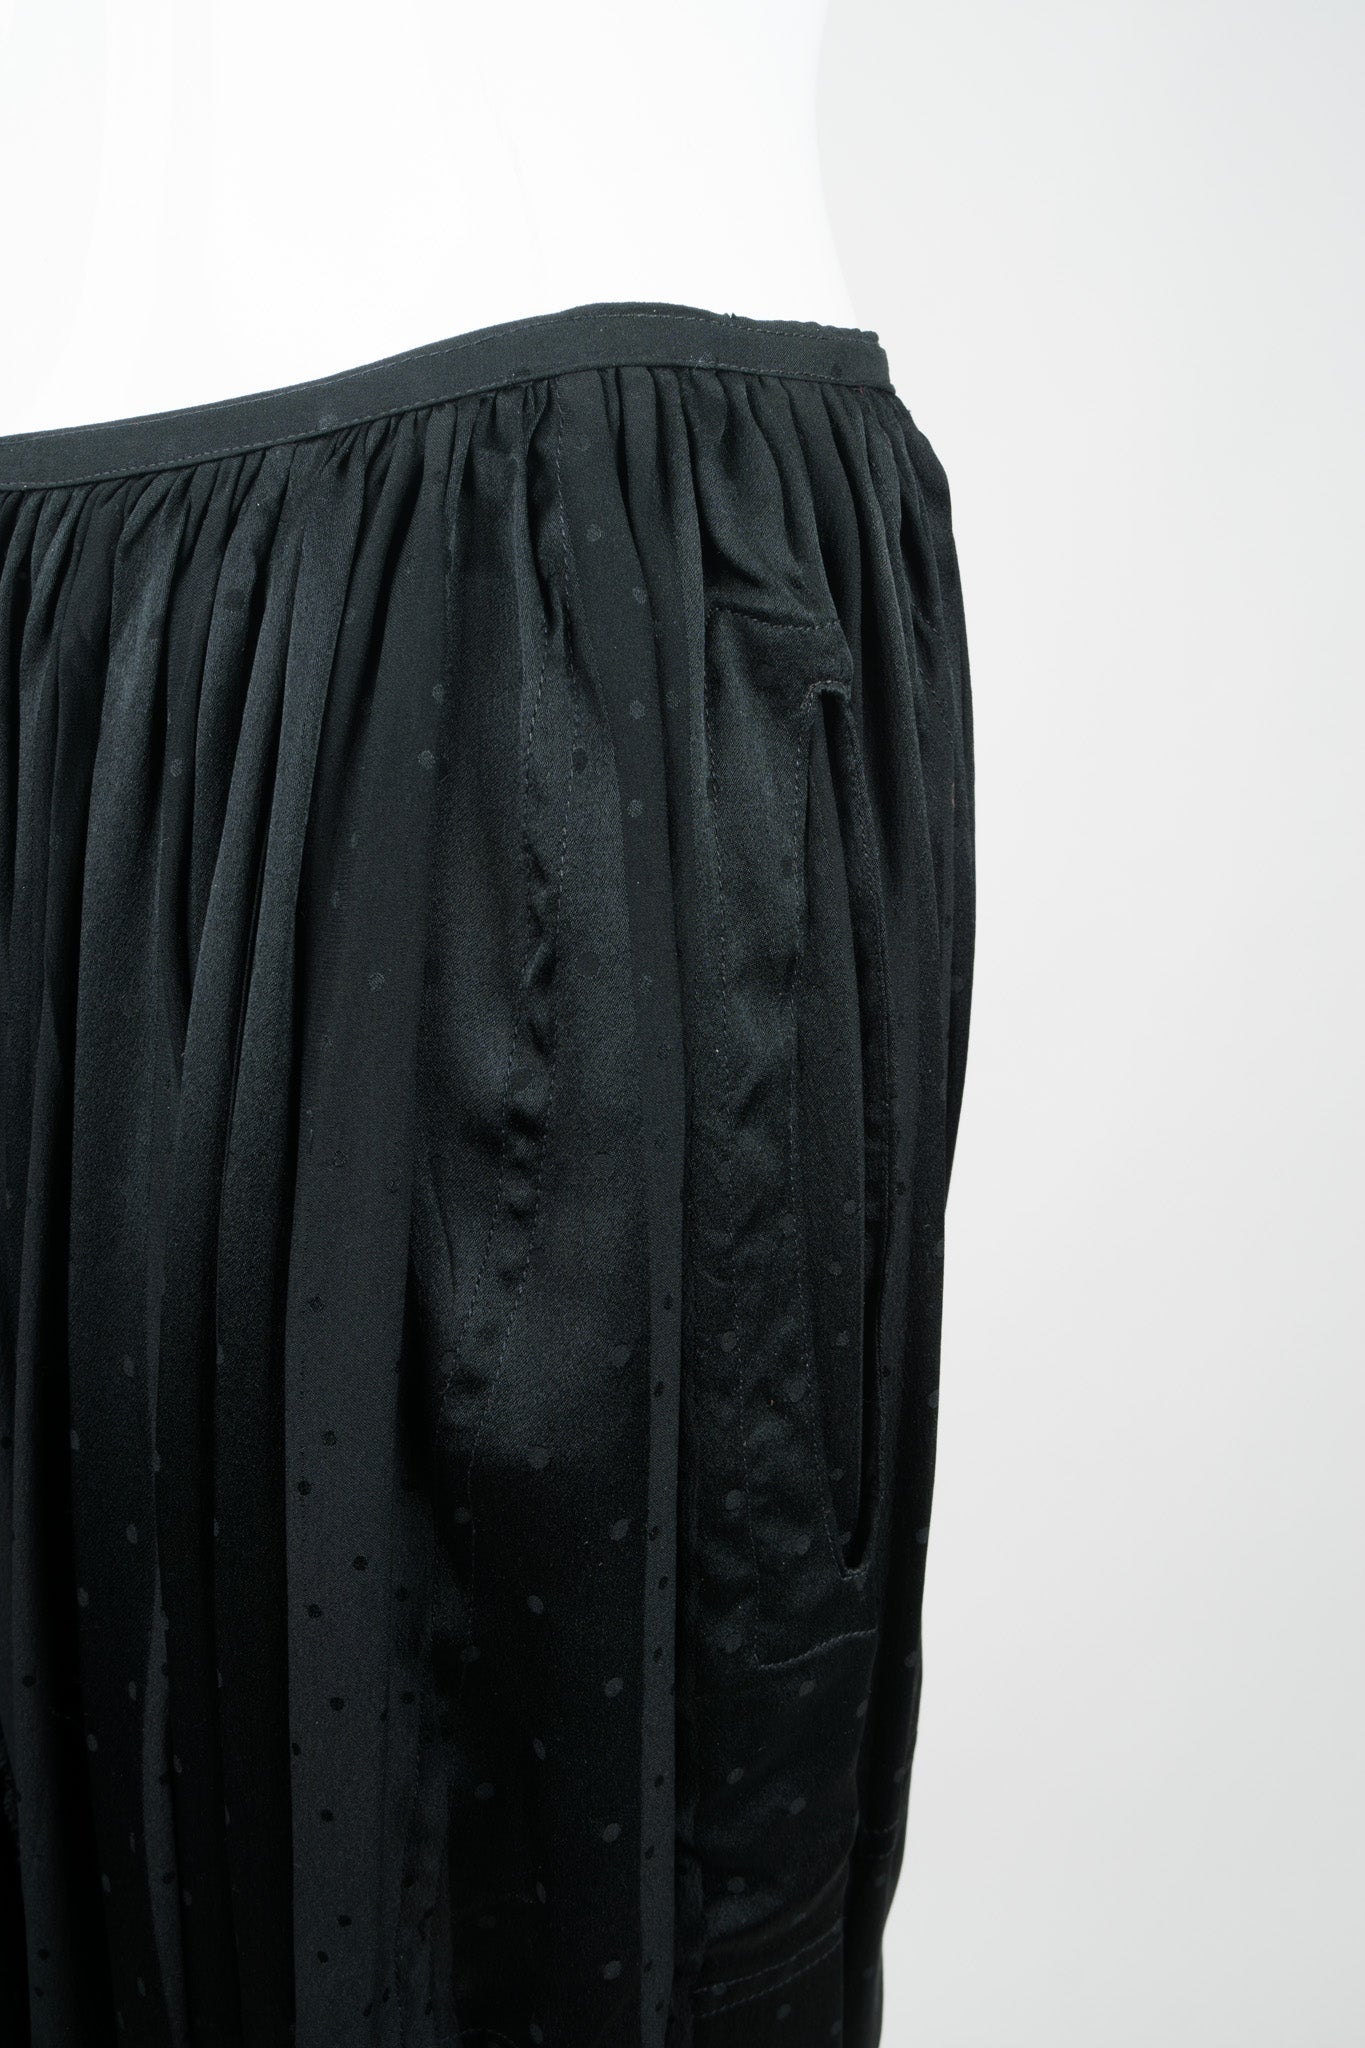 Jean Paul Gaultier JPG Maille Femme Silk Cropped Harem Pant